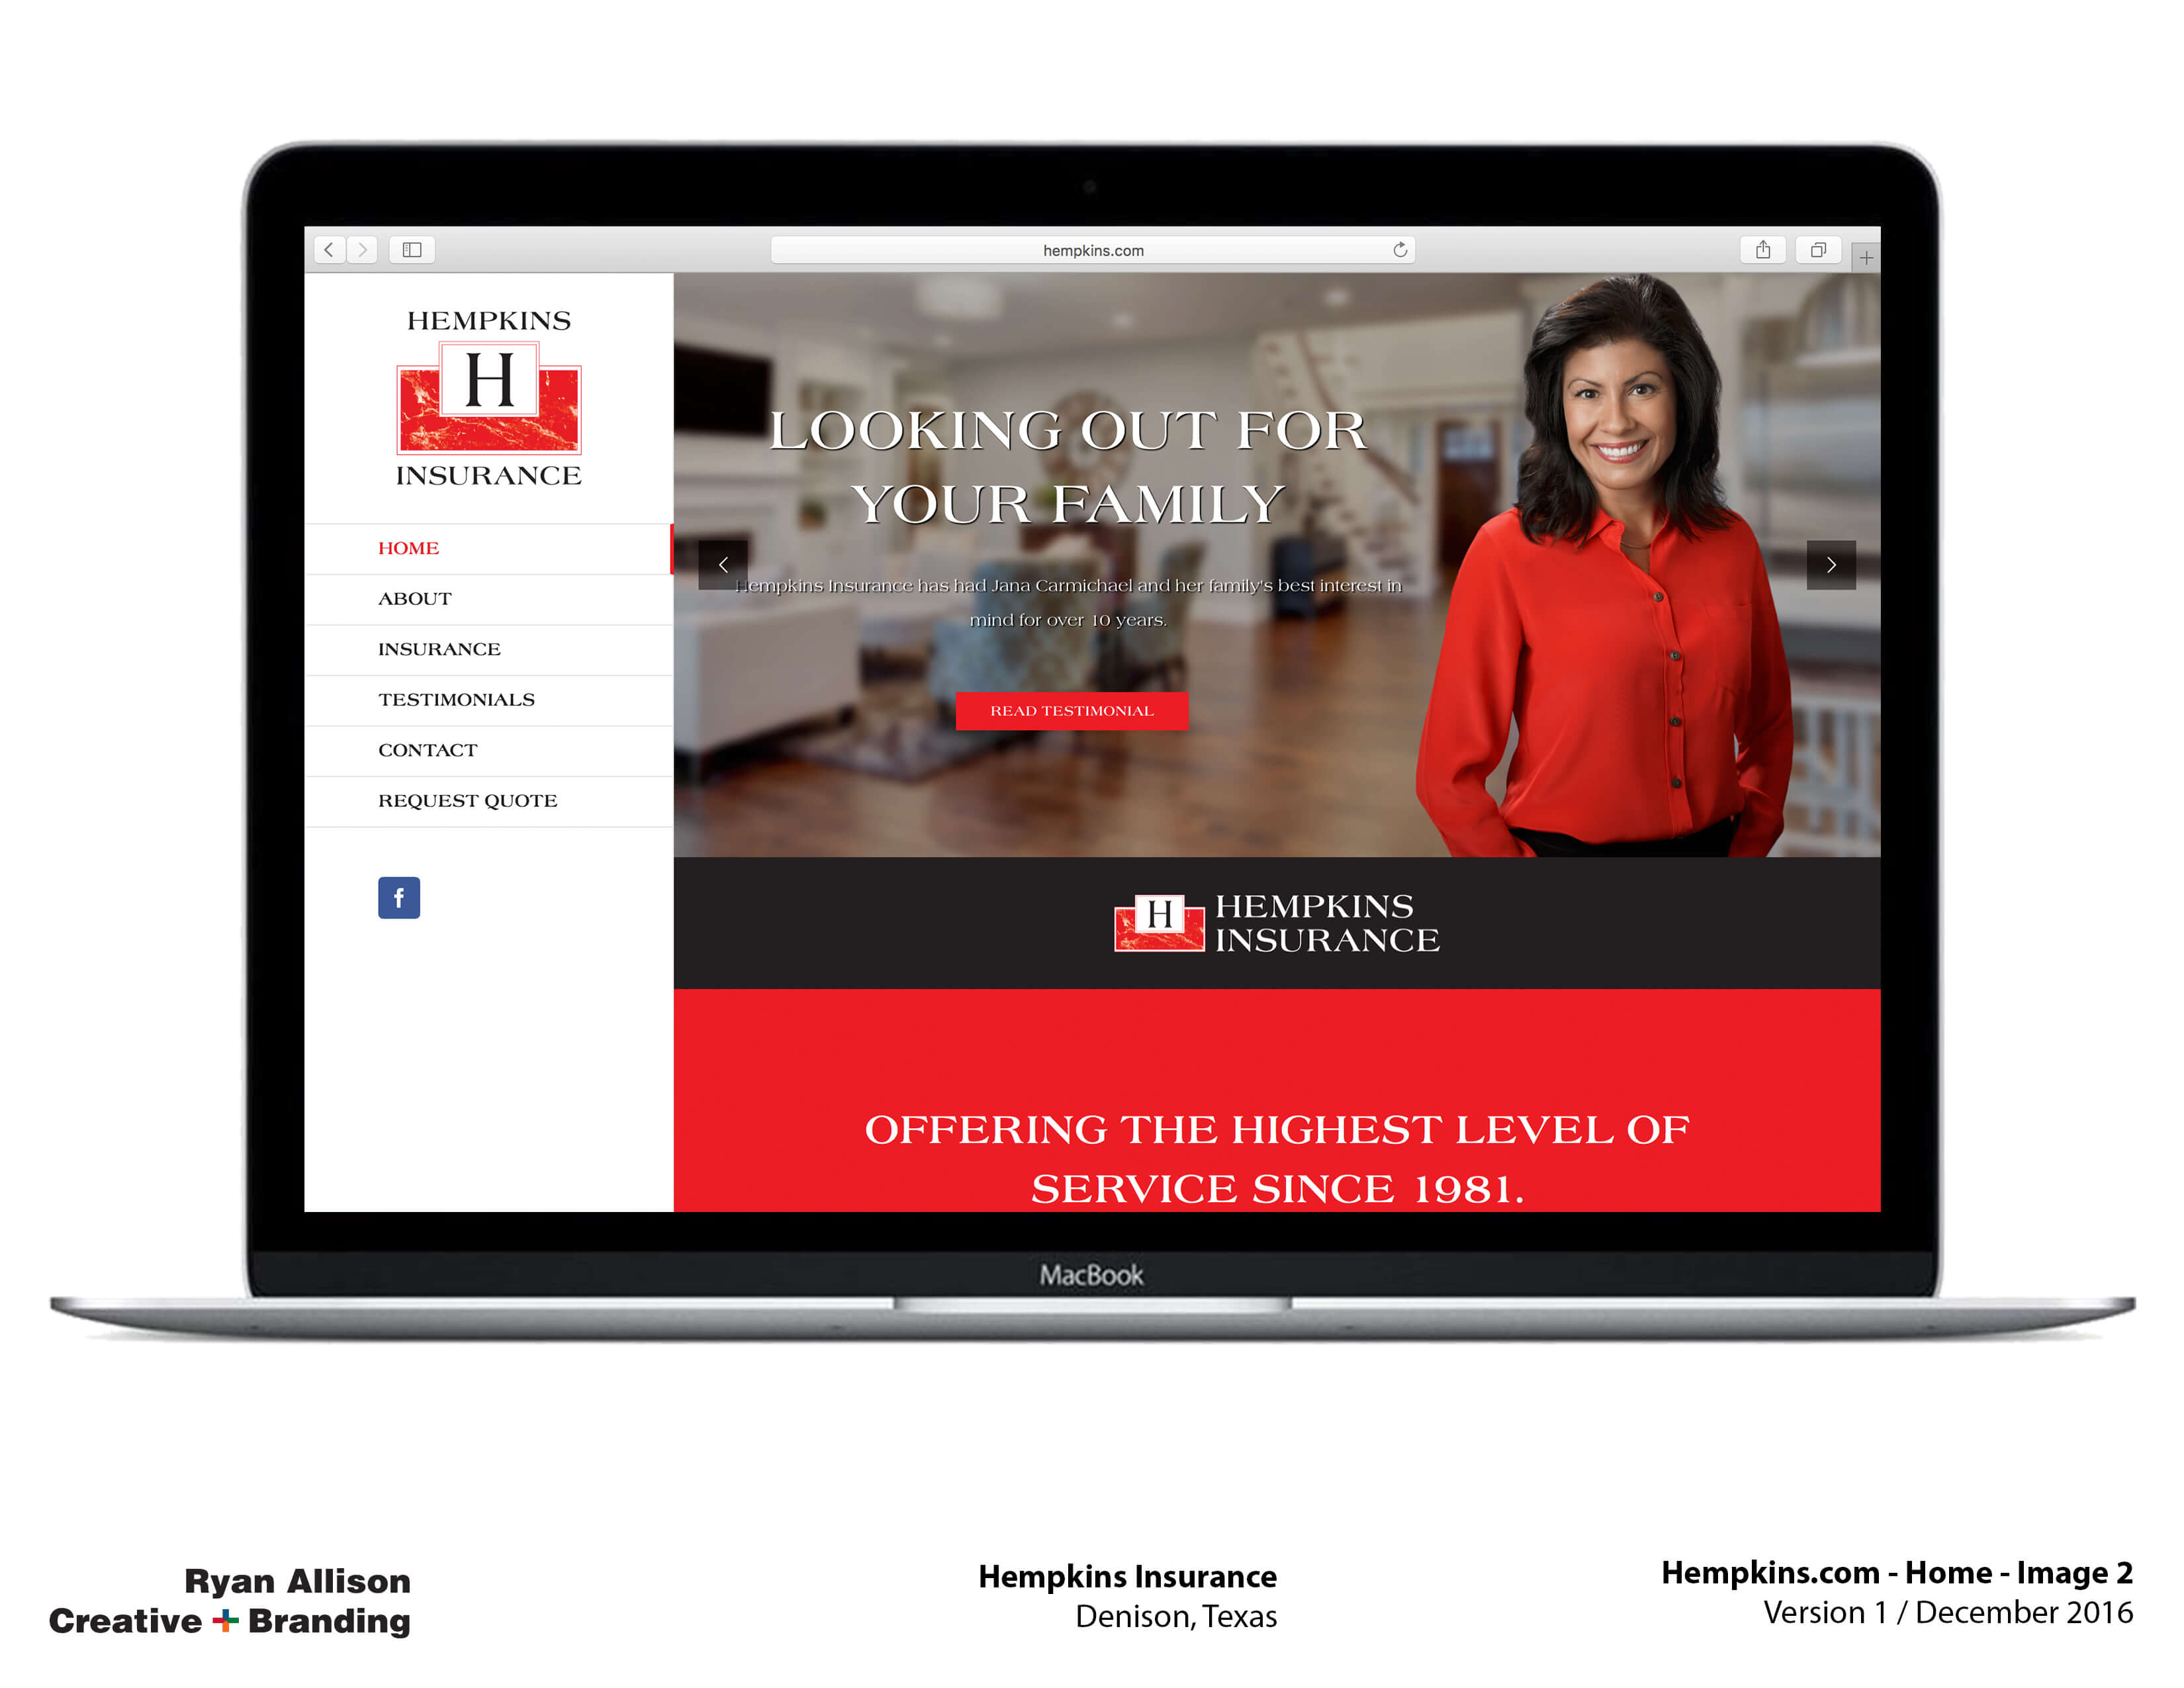 Hempkins Insurance Website Home 2 - Project - Ryan Allison Creative + Branding